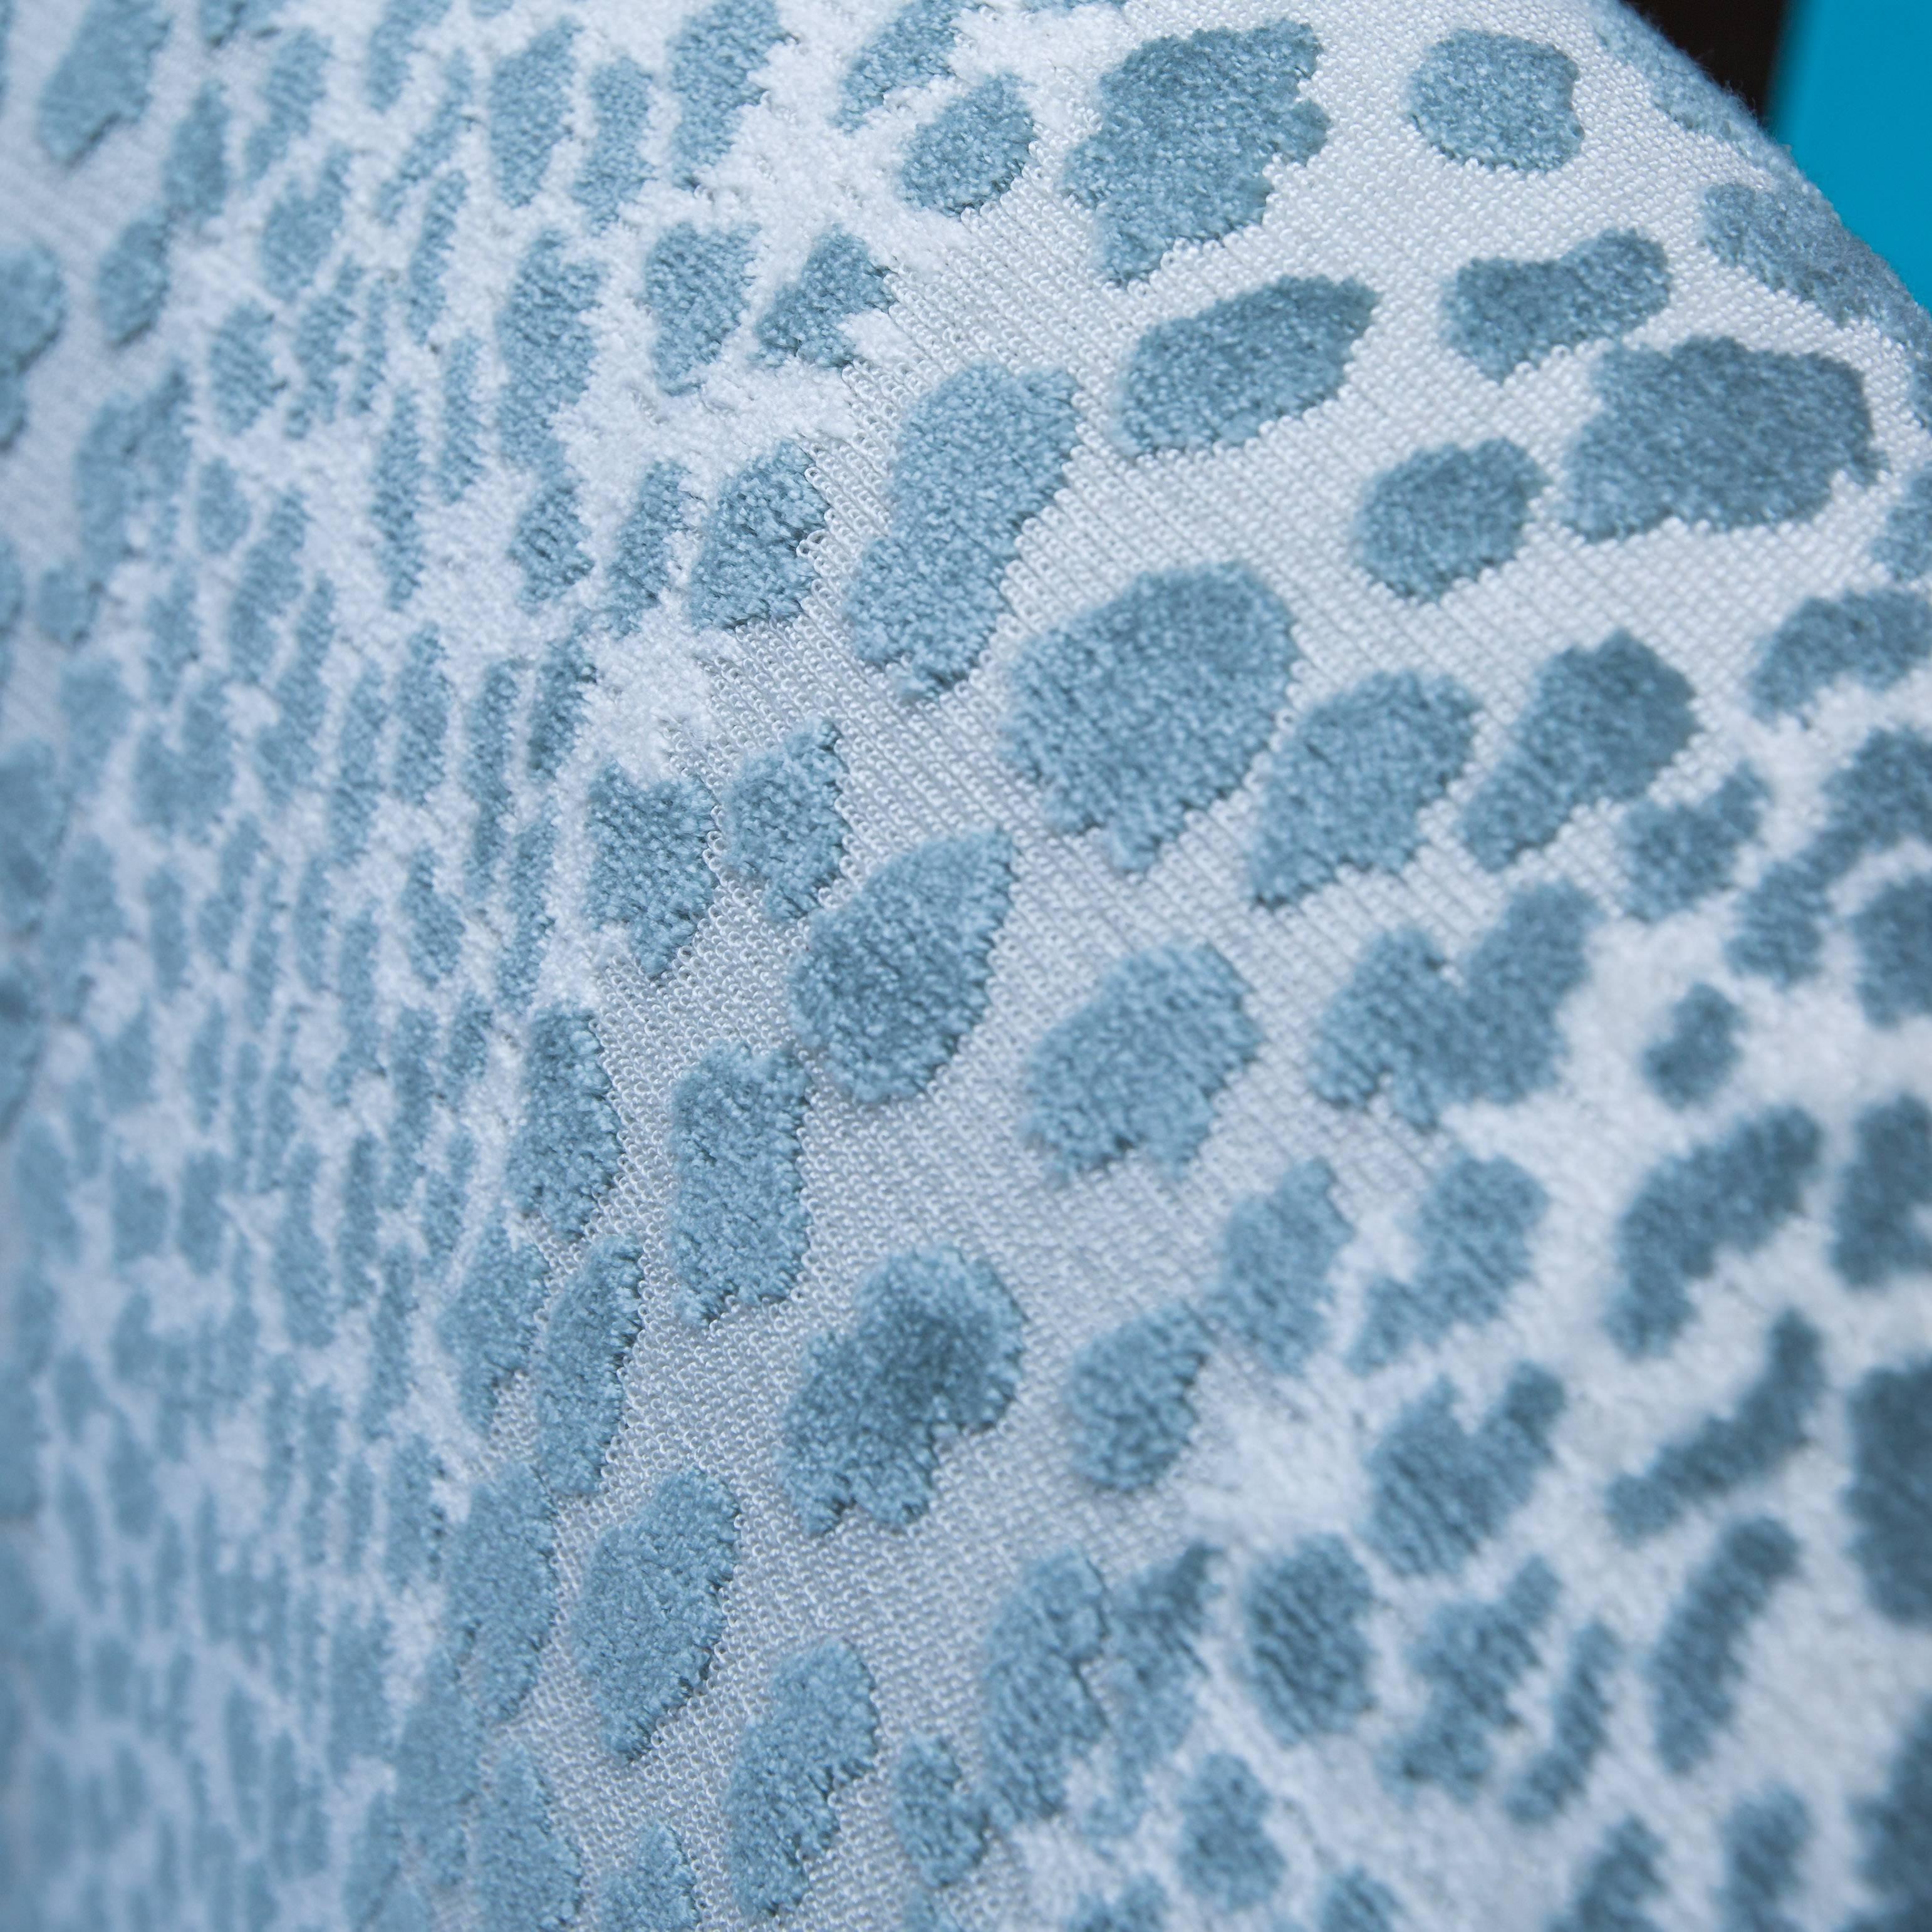 Custom-made swivel chairs that turn easily 360° newly upholstered in a Candice Olsen designed fabric for Kravet.